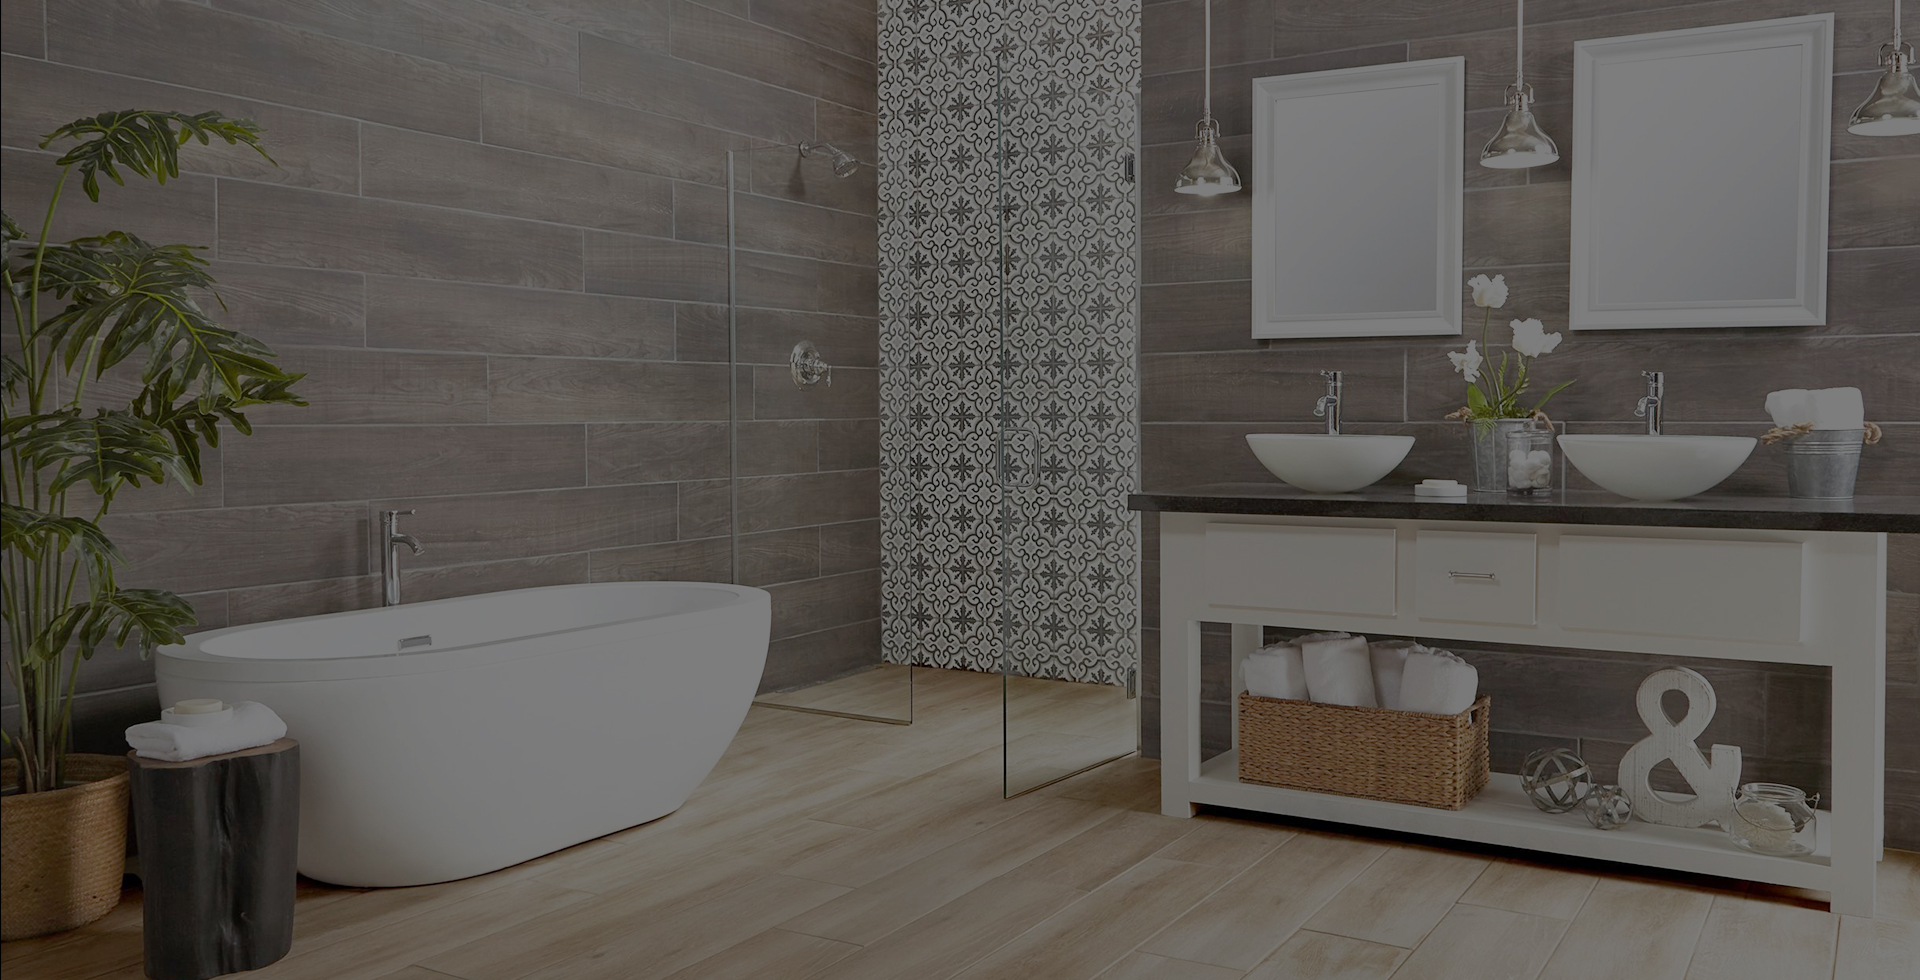 A modern bathroom with wood panel flooring, an open shower, and a bathtub.